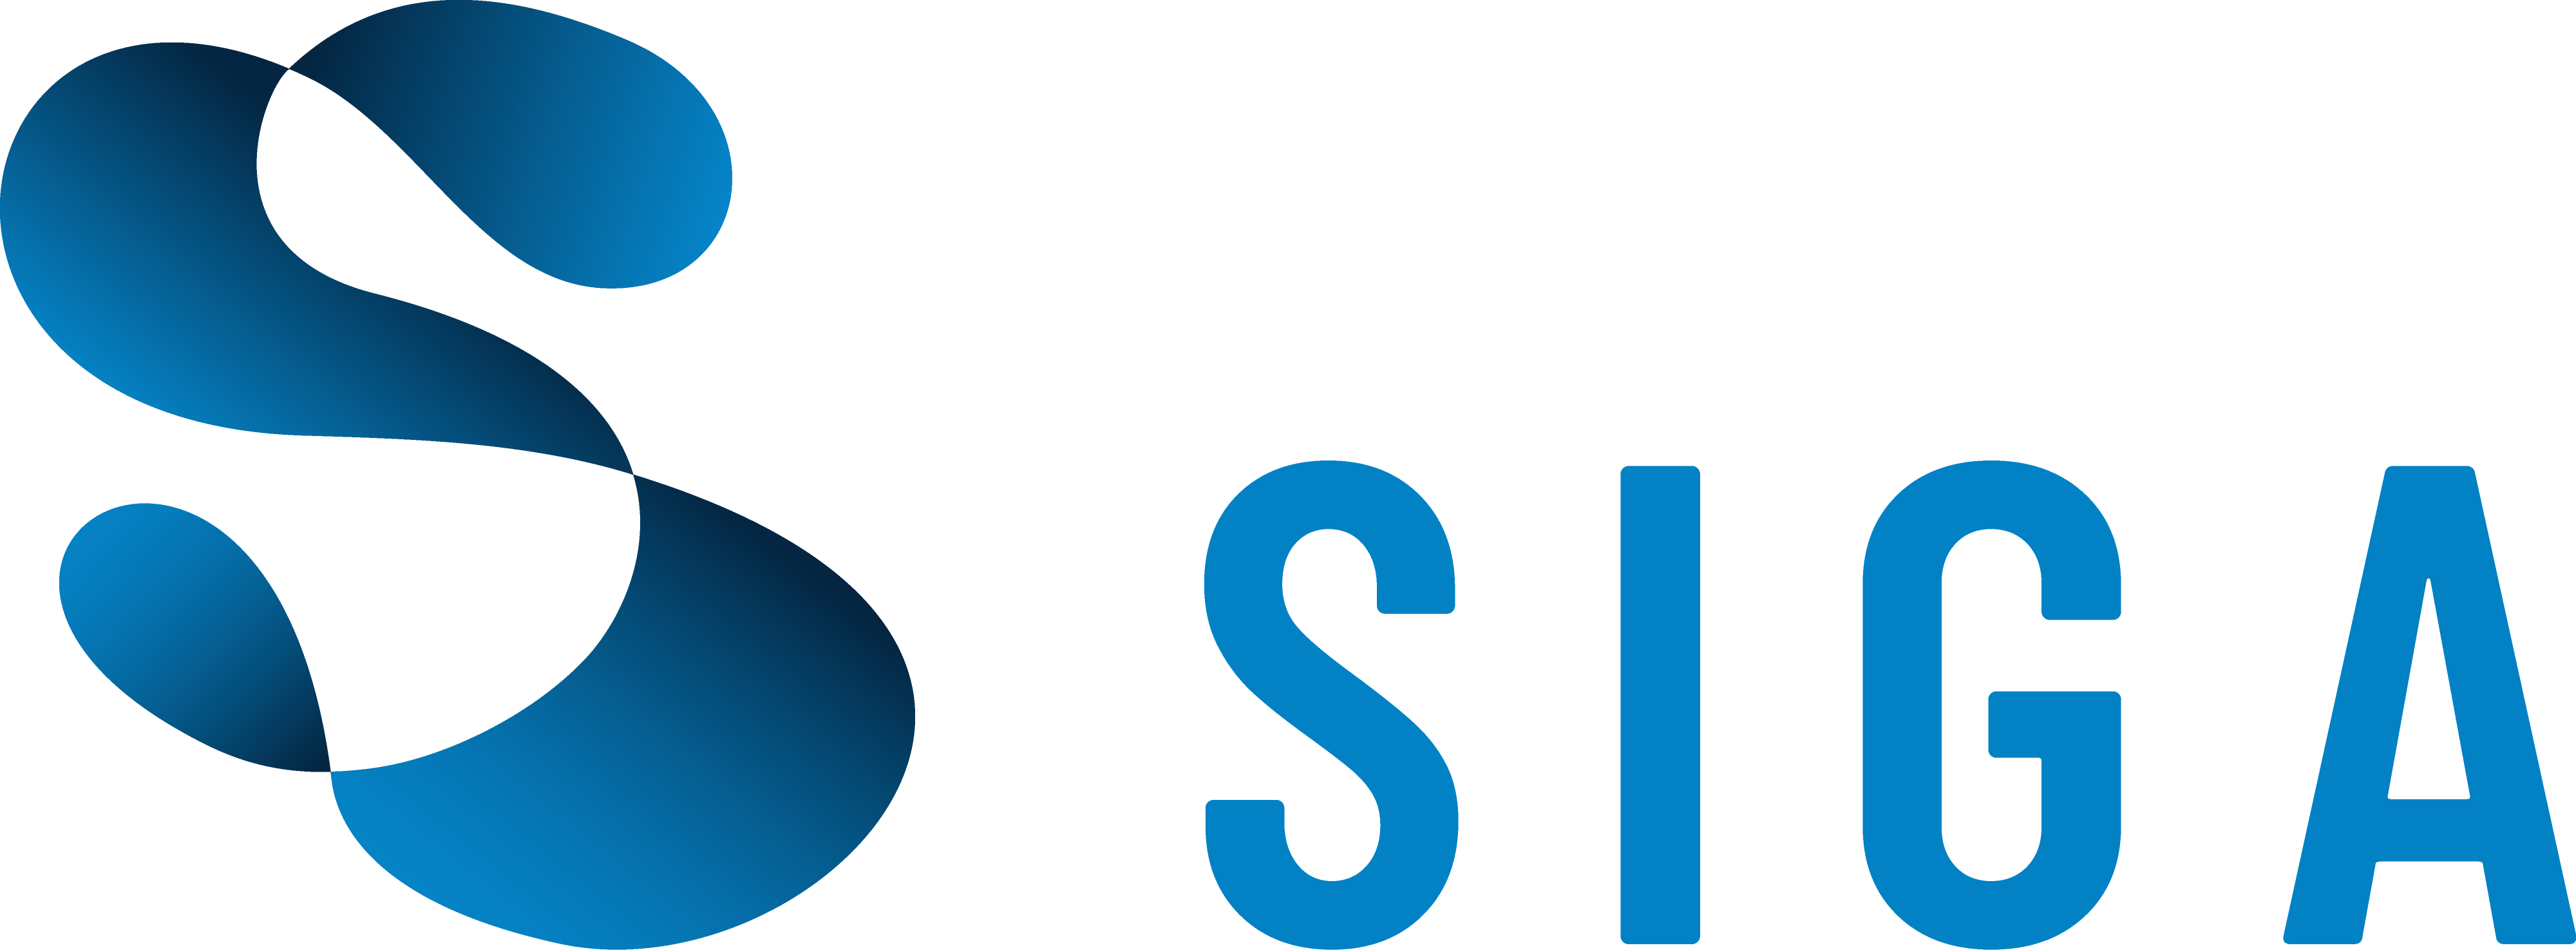 SIGA logo blue.png